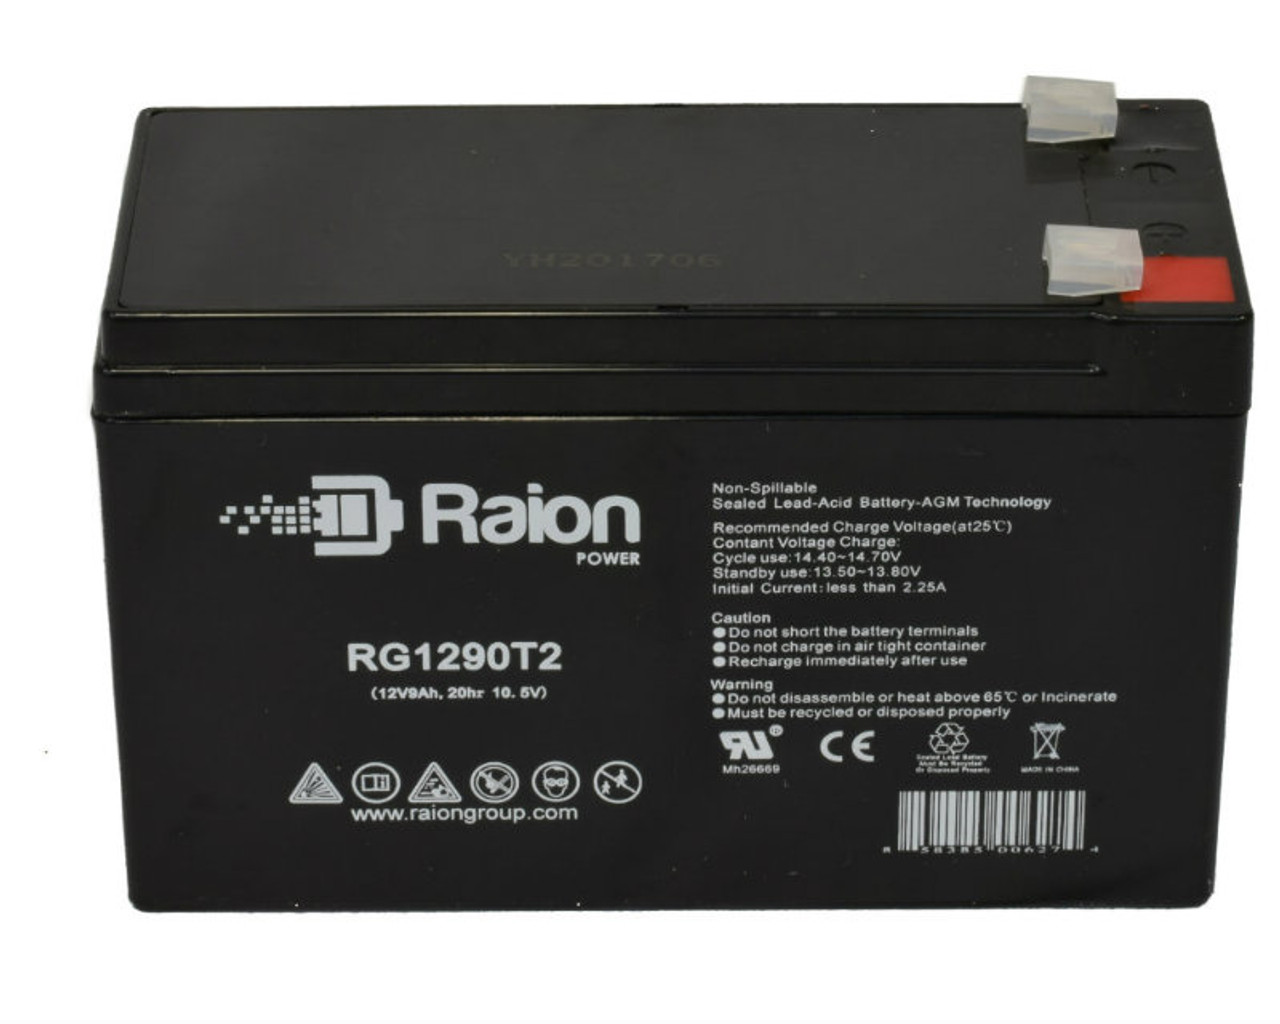 Raion Power RG1290T2 12V 9Ah Lead Acid Battery for SigmasTek SP12-9